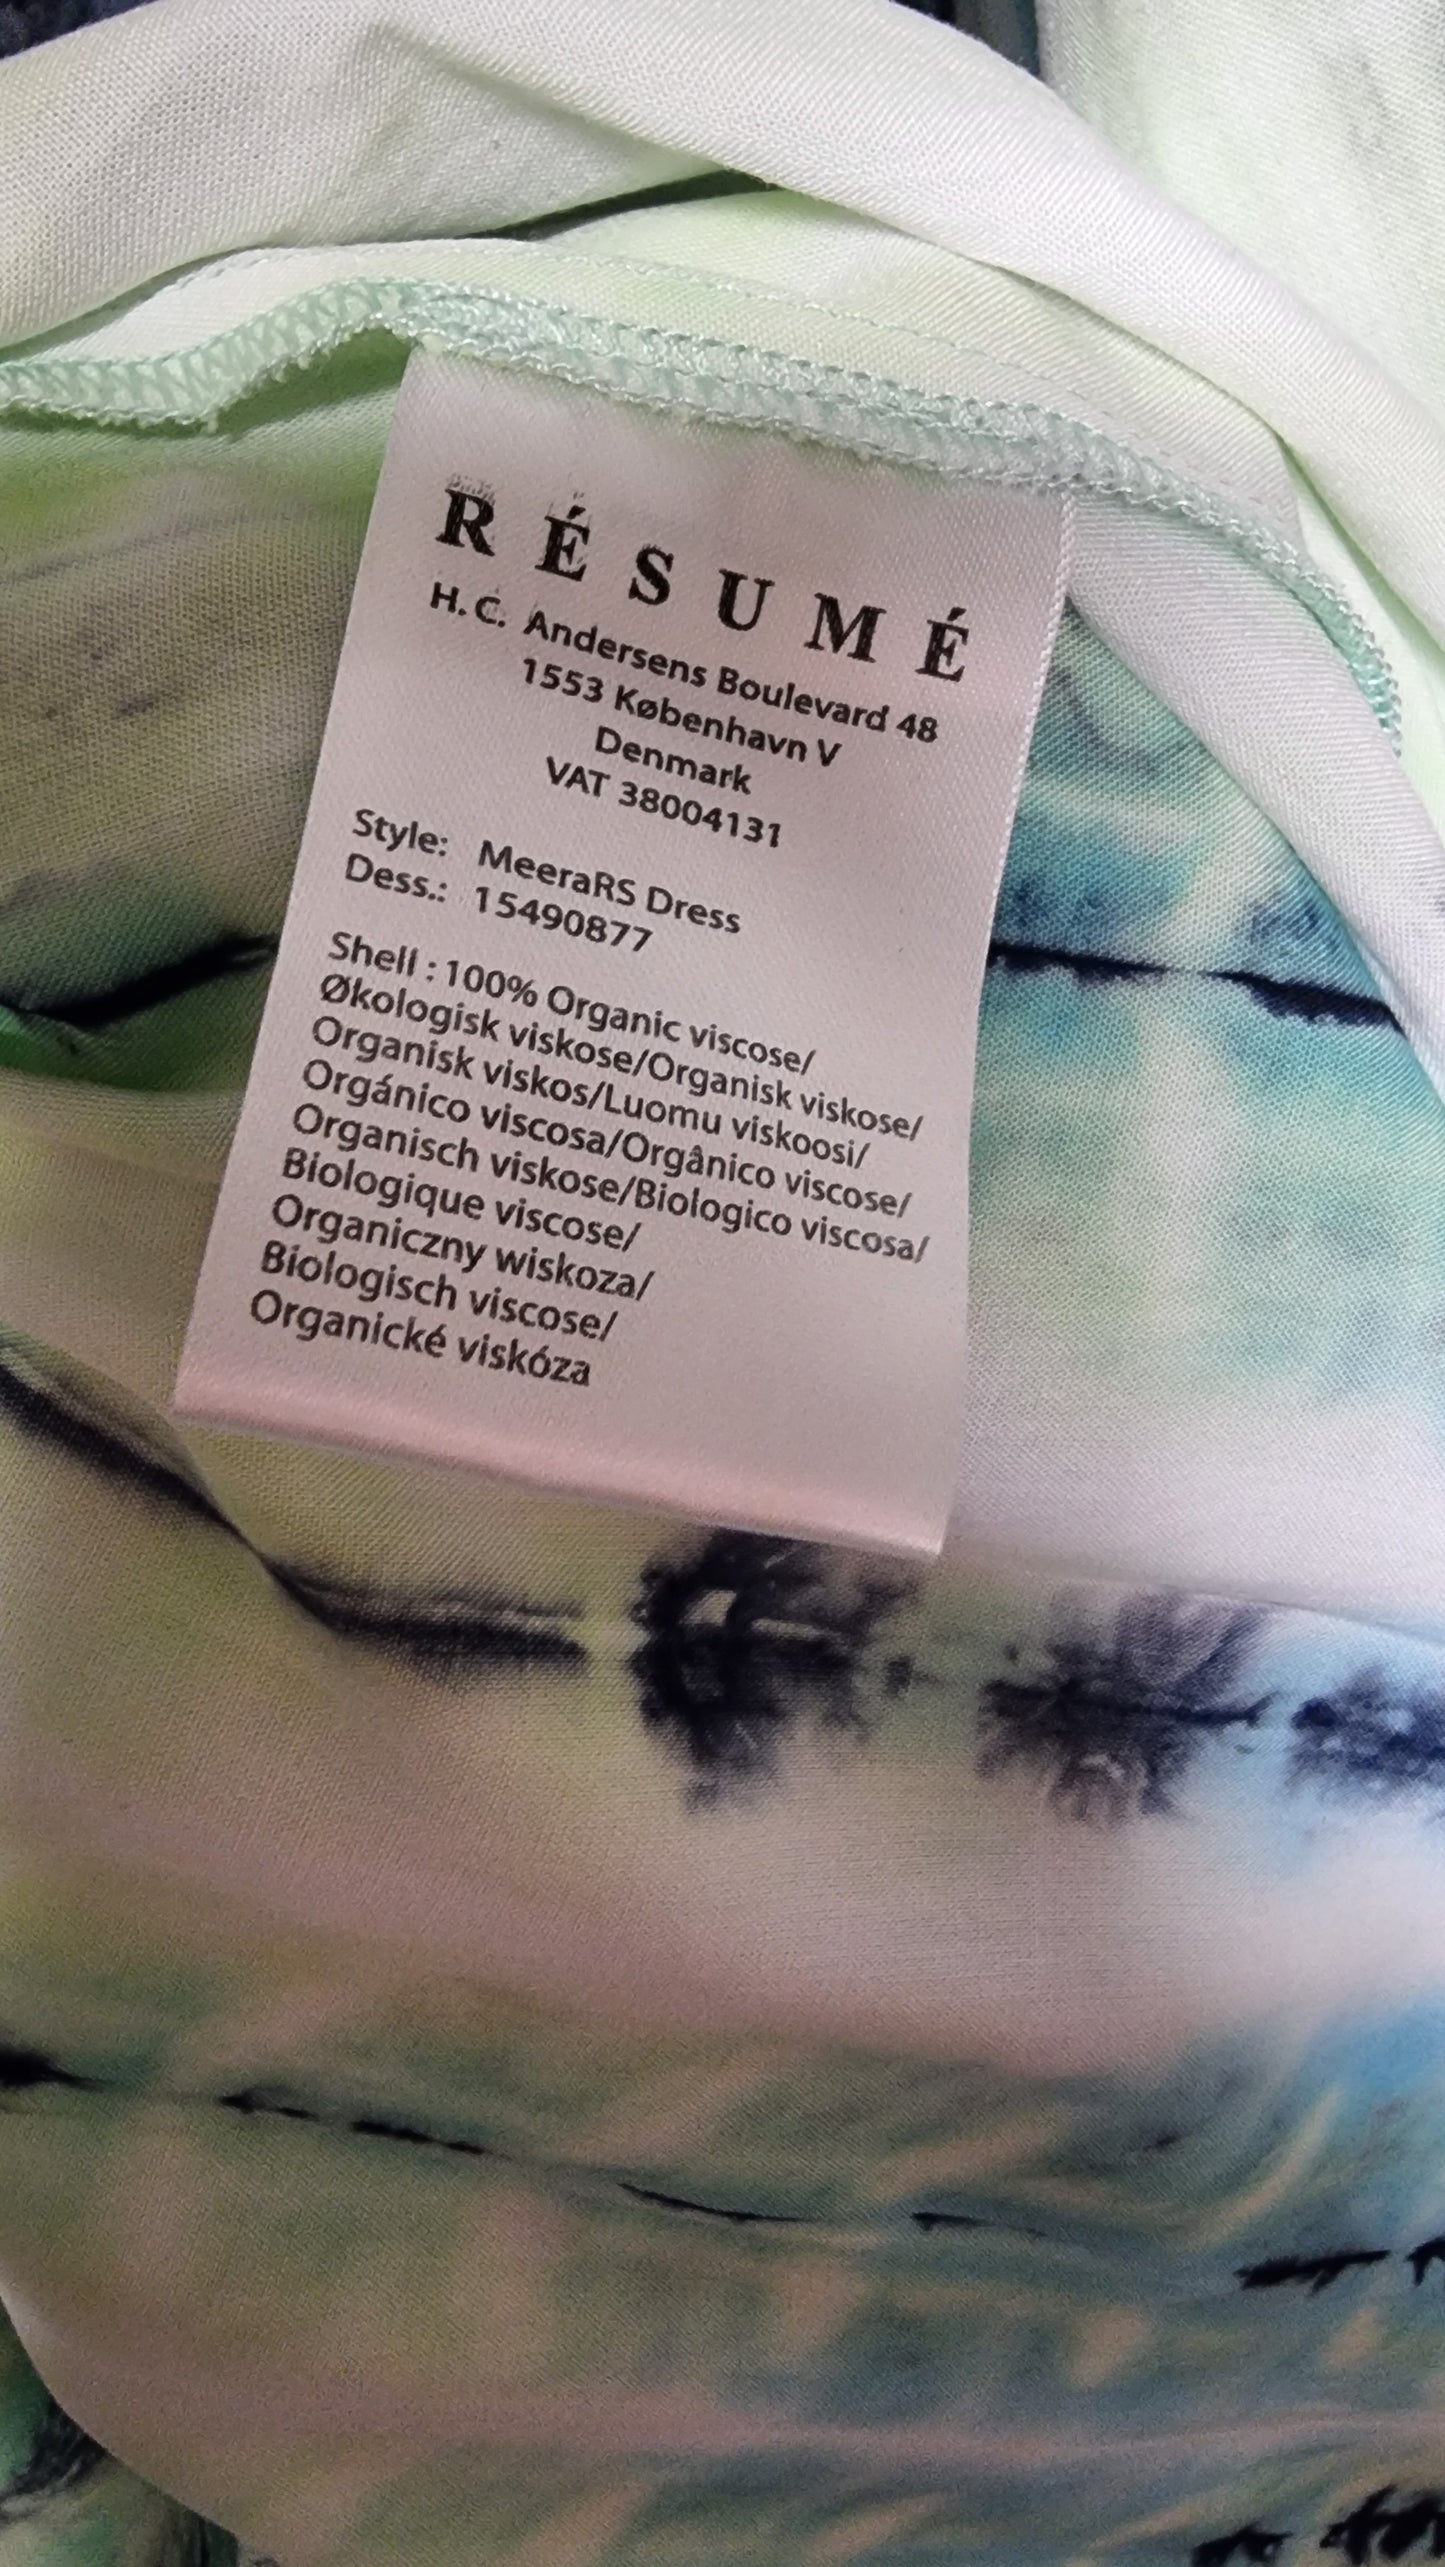 Resume Multi-coloured Maxi Dress with Lace-up Back, Size Medium